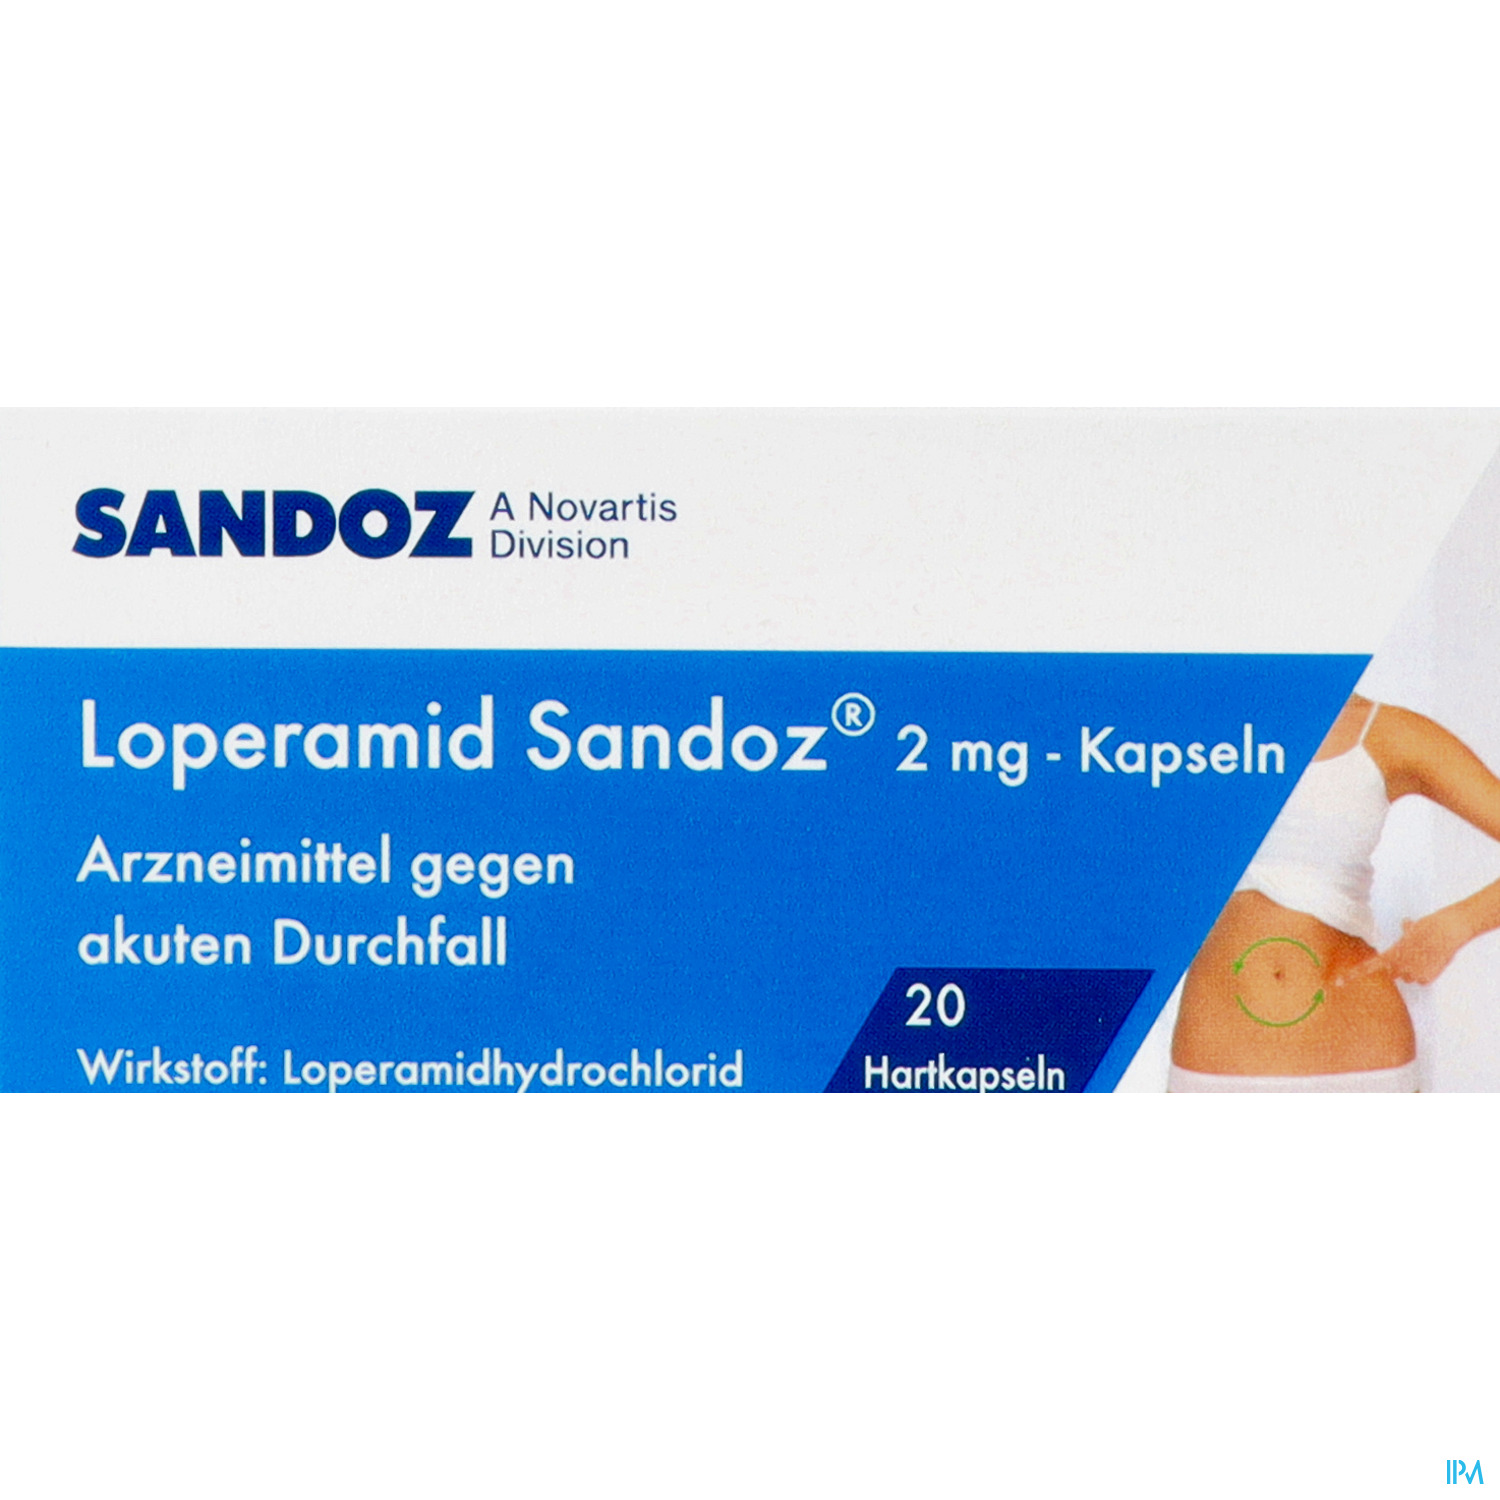 Loperamid Sandoz 2 mg - Kapseln